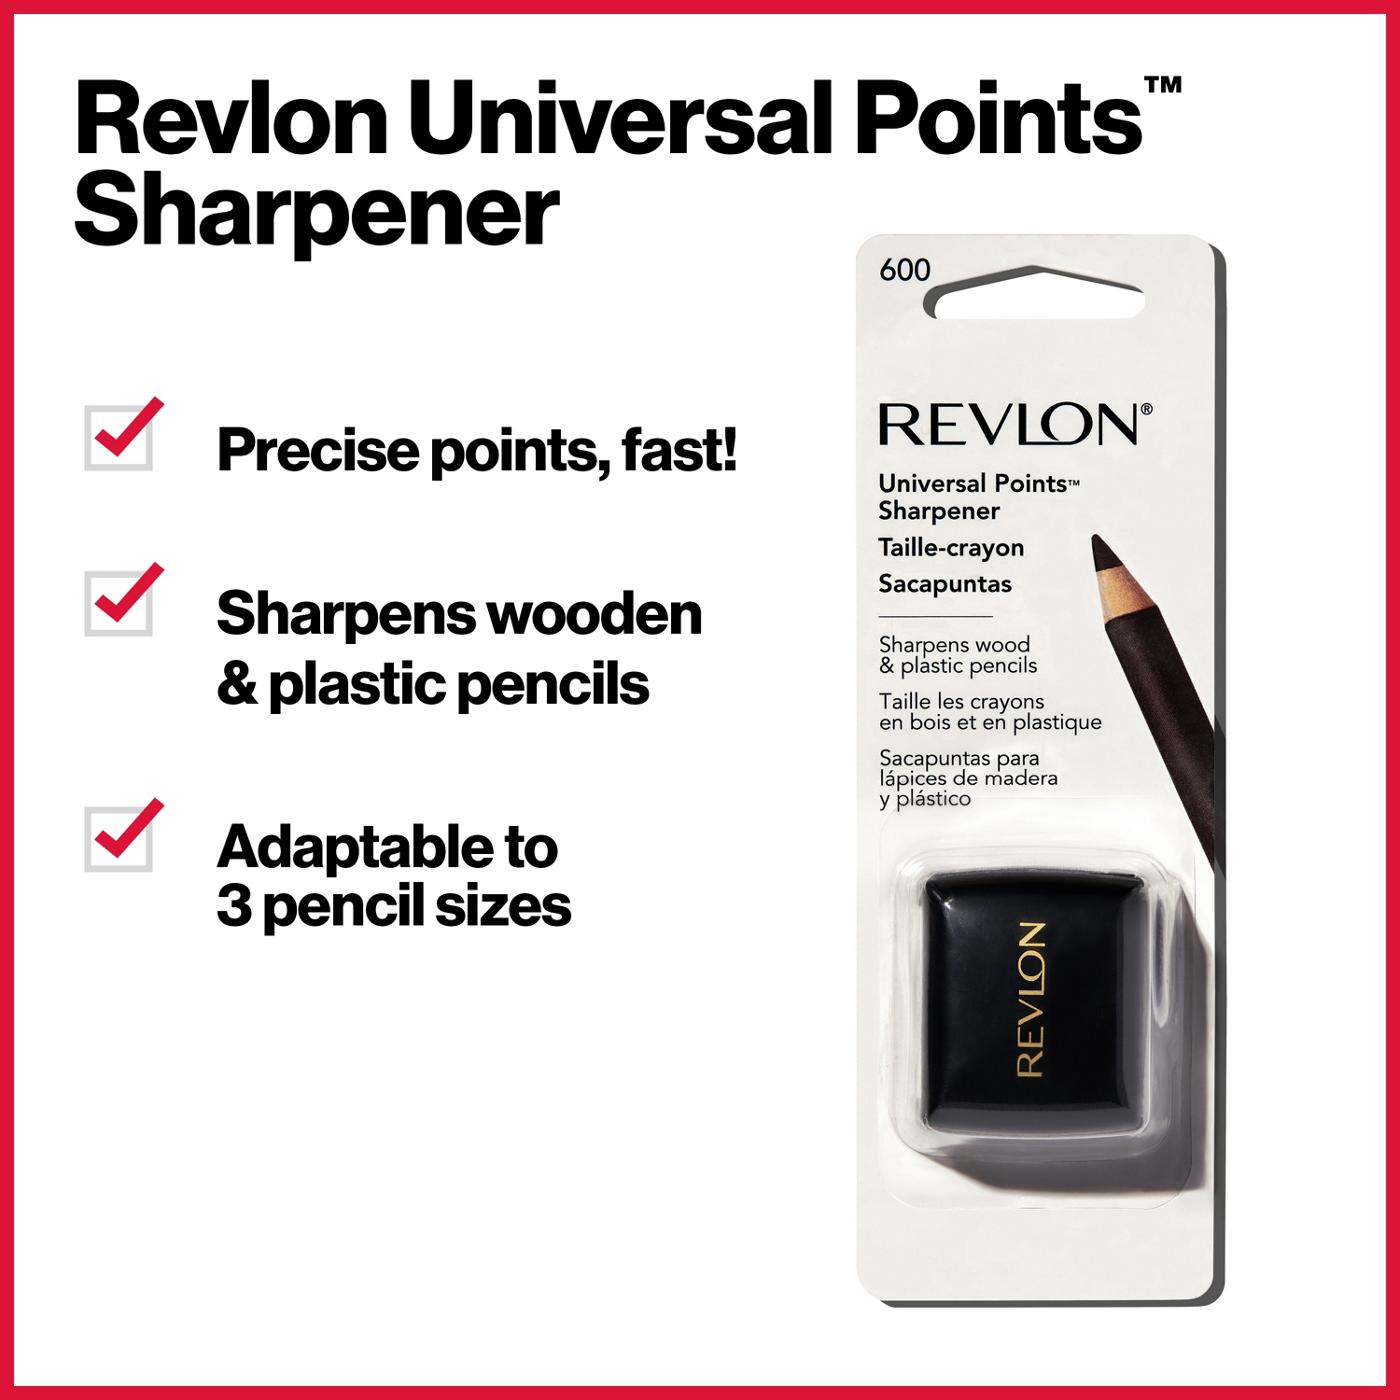 Revlon Universal Points Sharpener; image 3 of 7